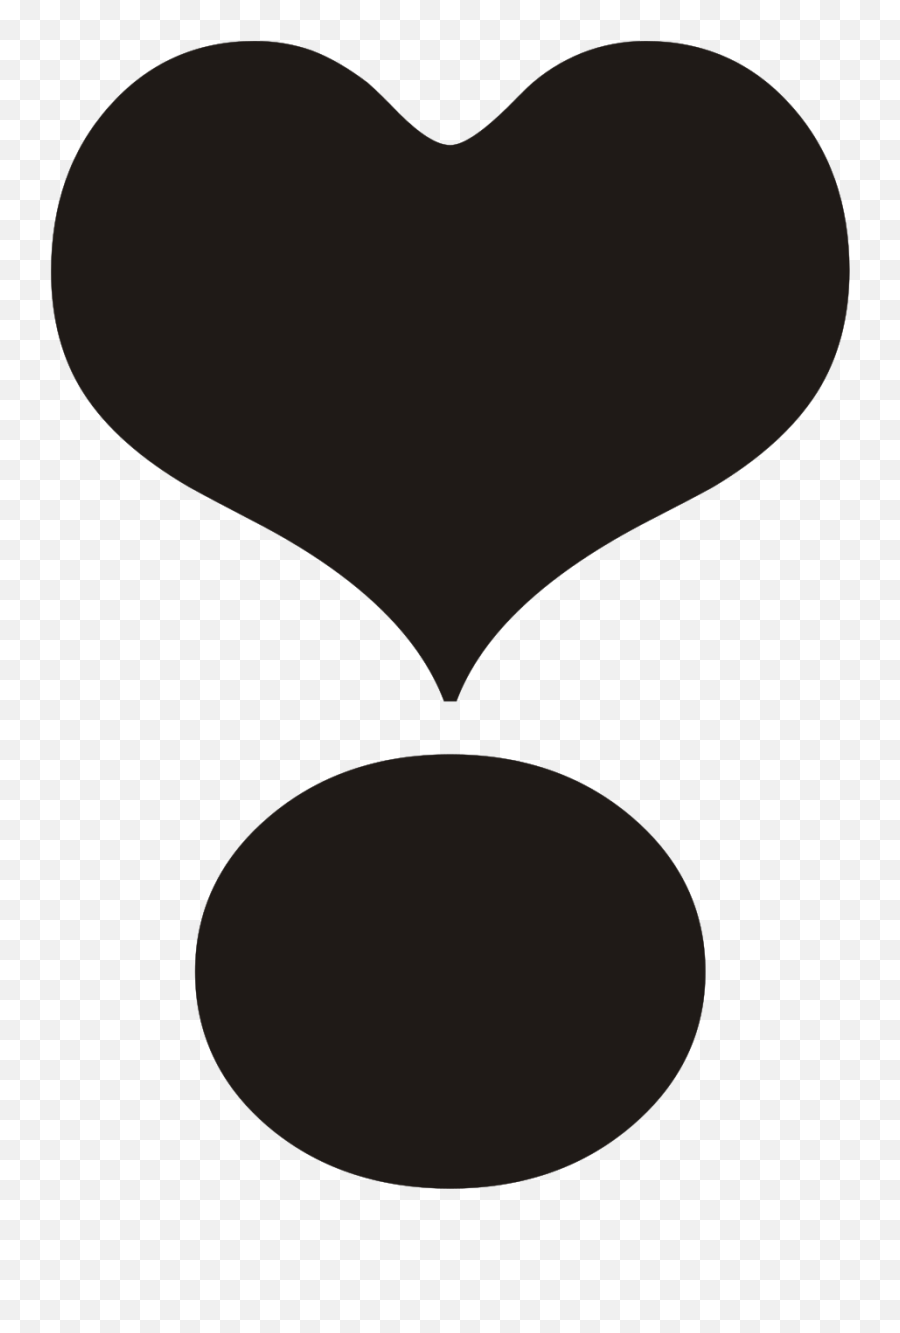 Fileexclamation Mark Heart Blacksvg - Wikimedia Commons Emoji,Exclamation Mark Emoji